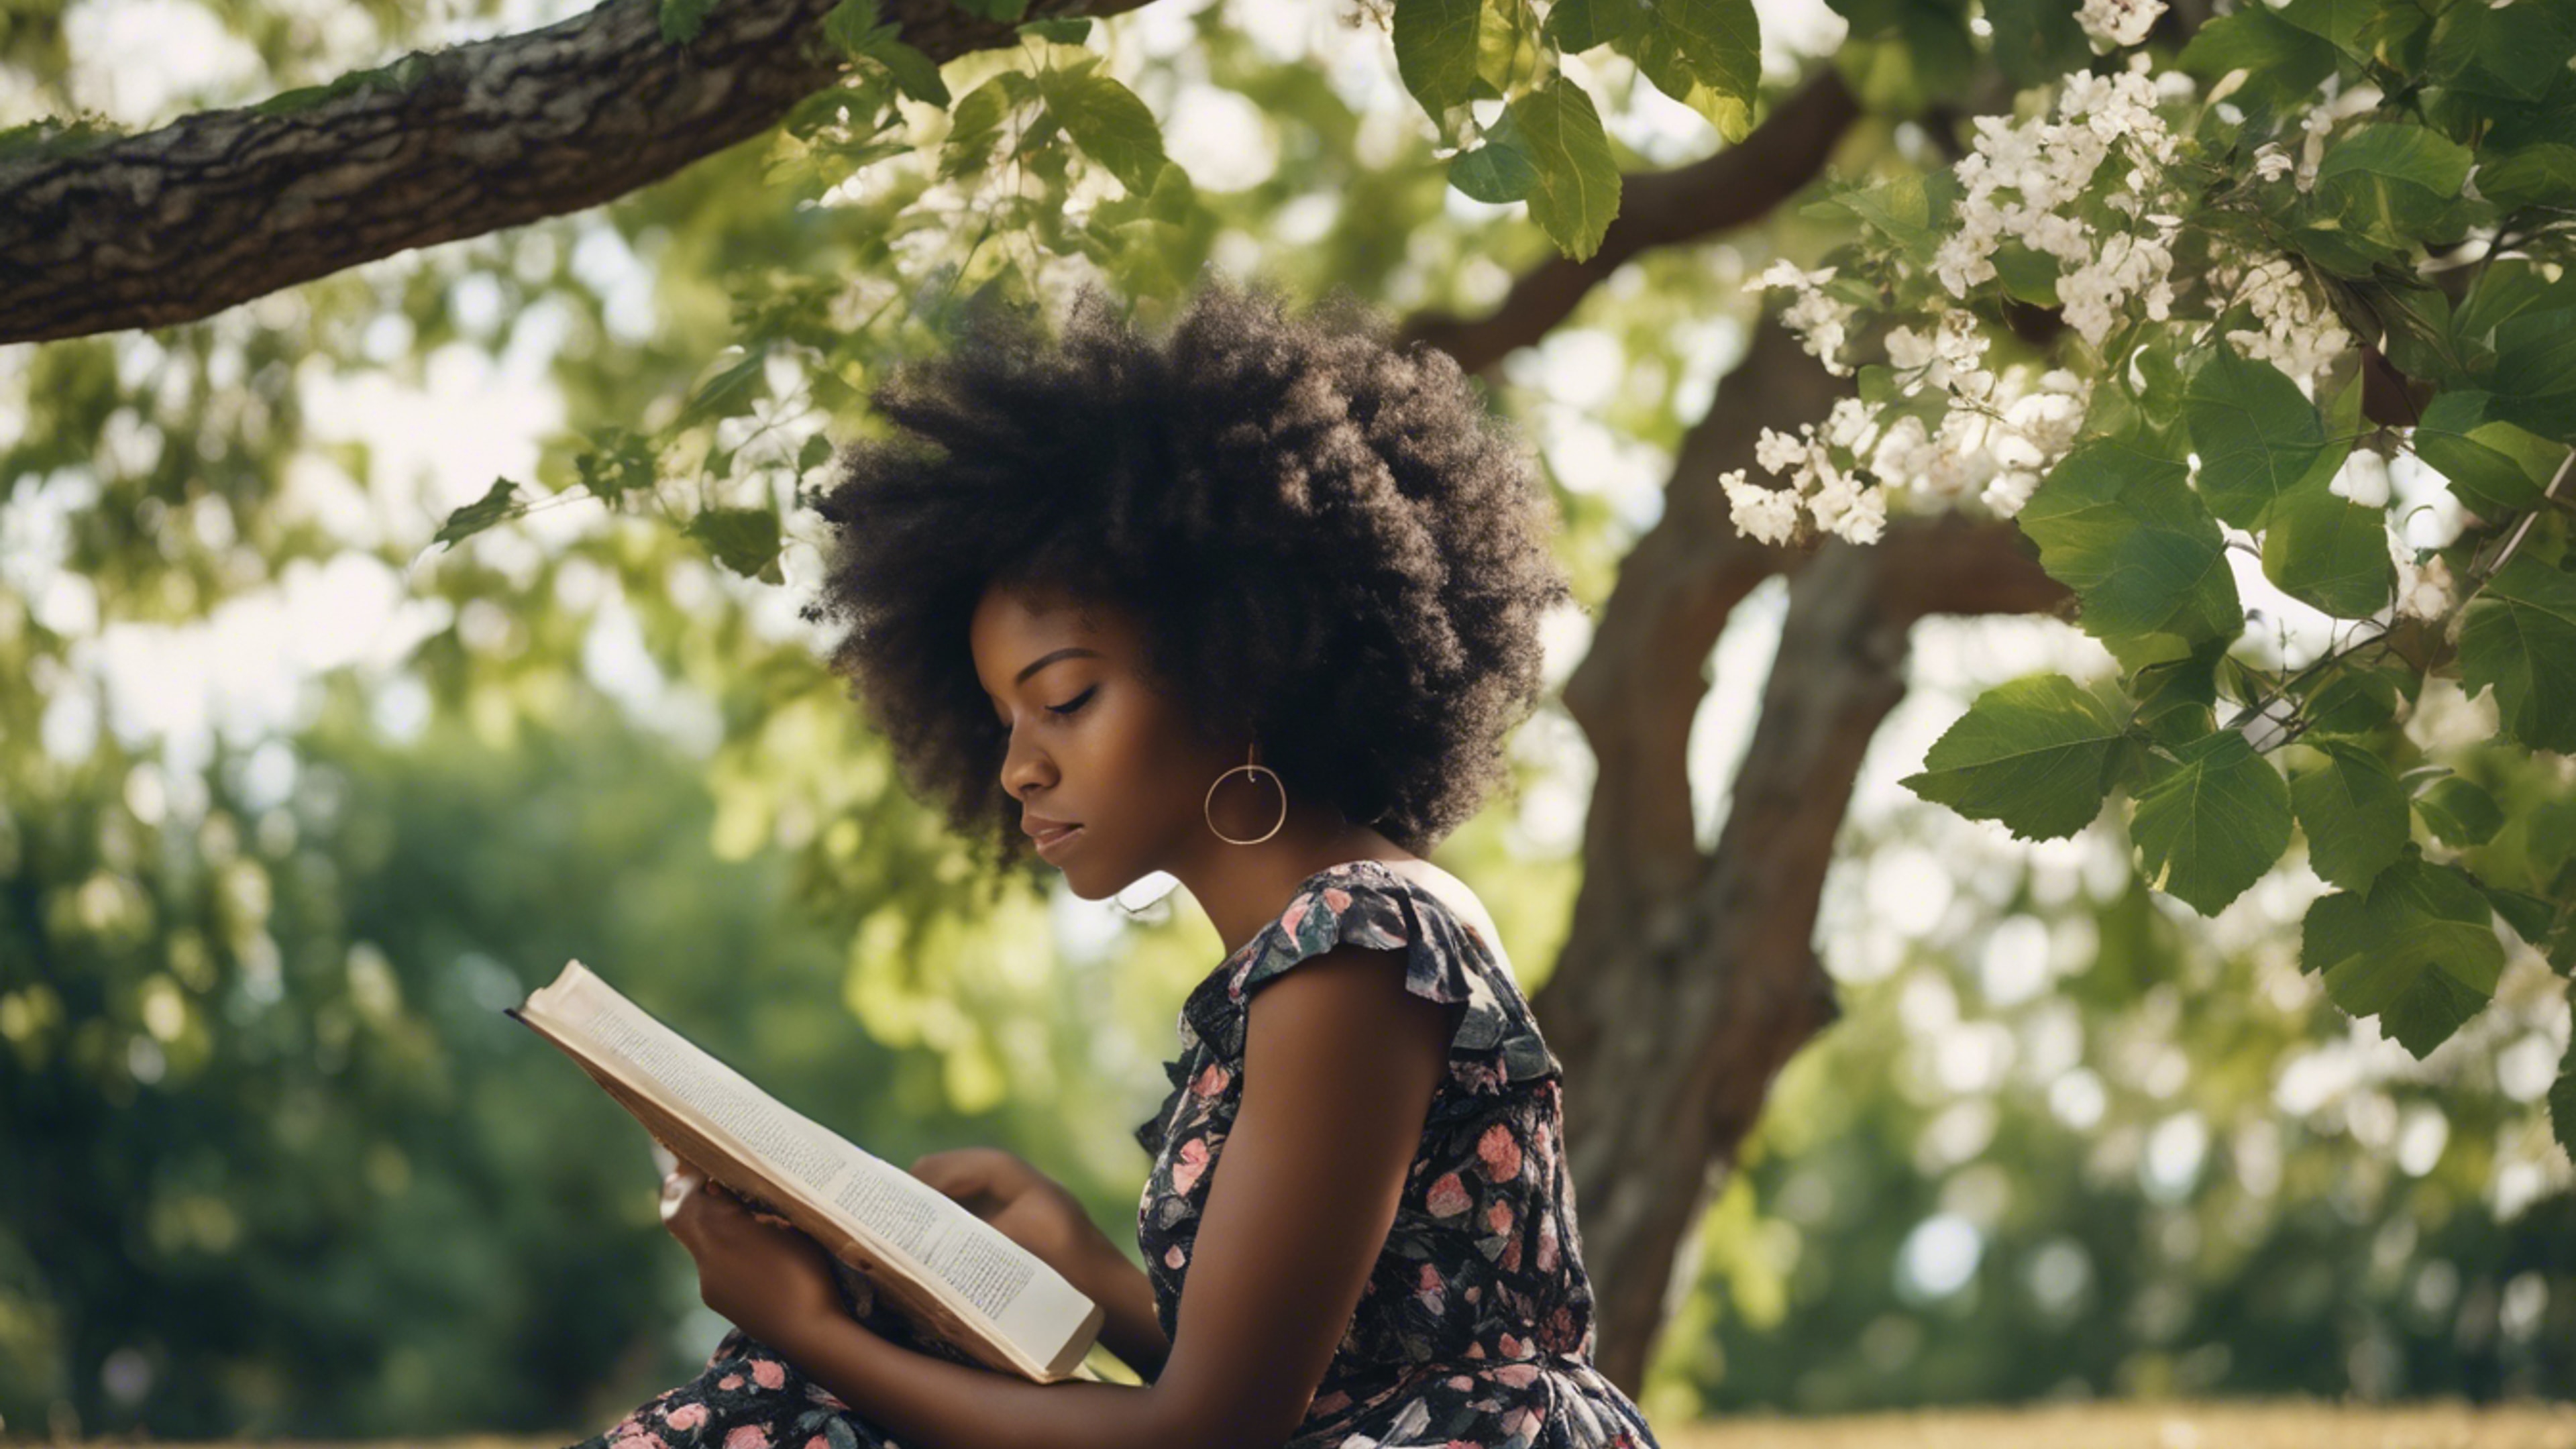 A black girl wearing a floral summer dress, reading a book under a leafy tree.壁紙[43e6f52508fc47b3bd35]